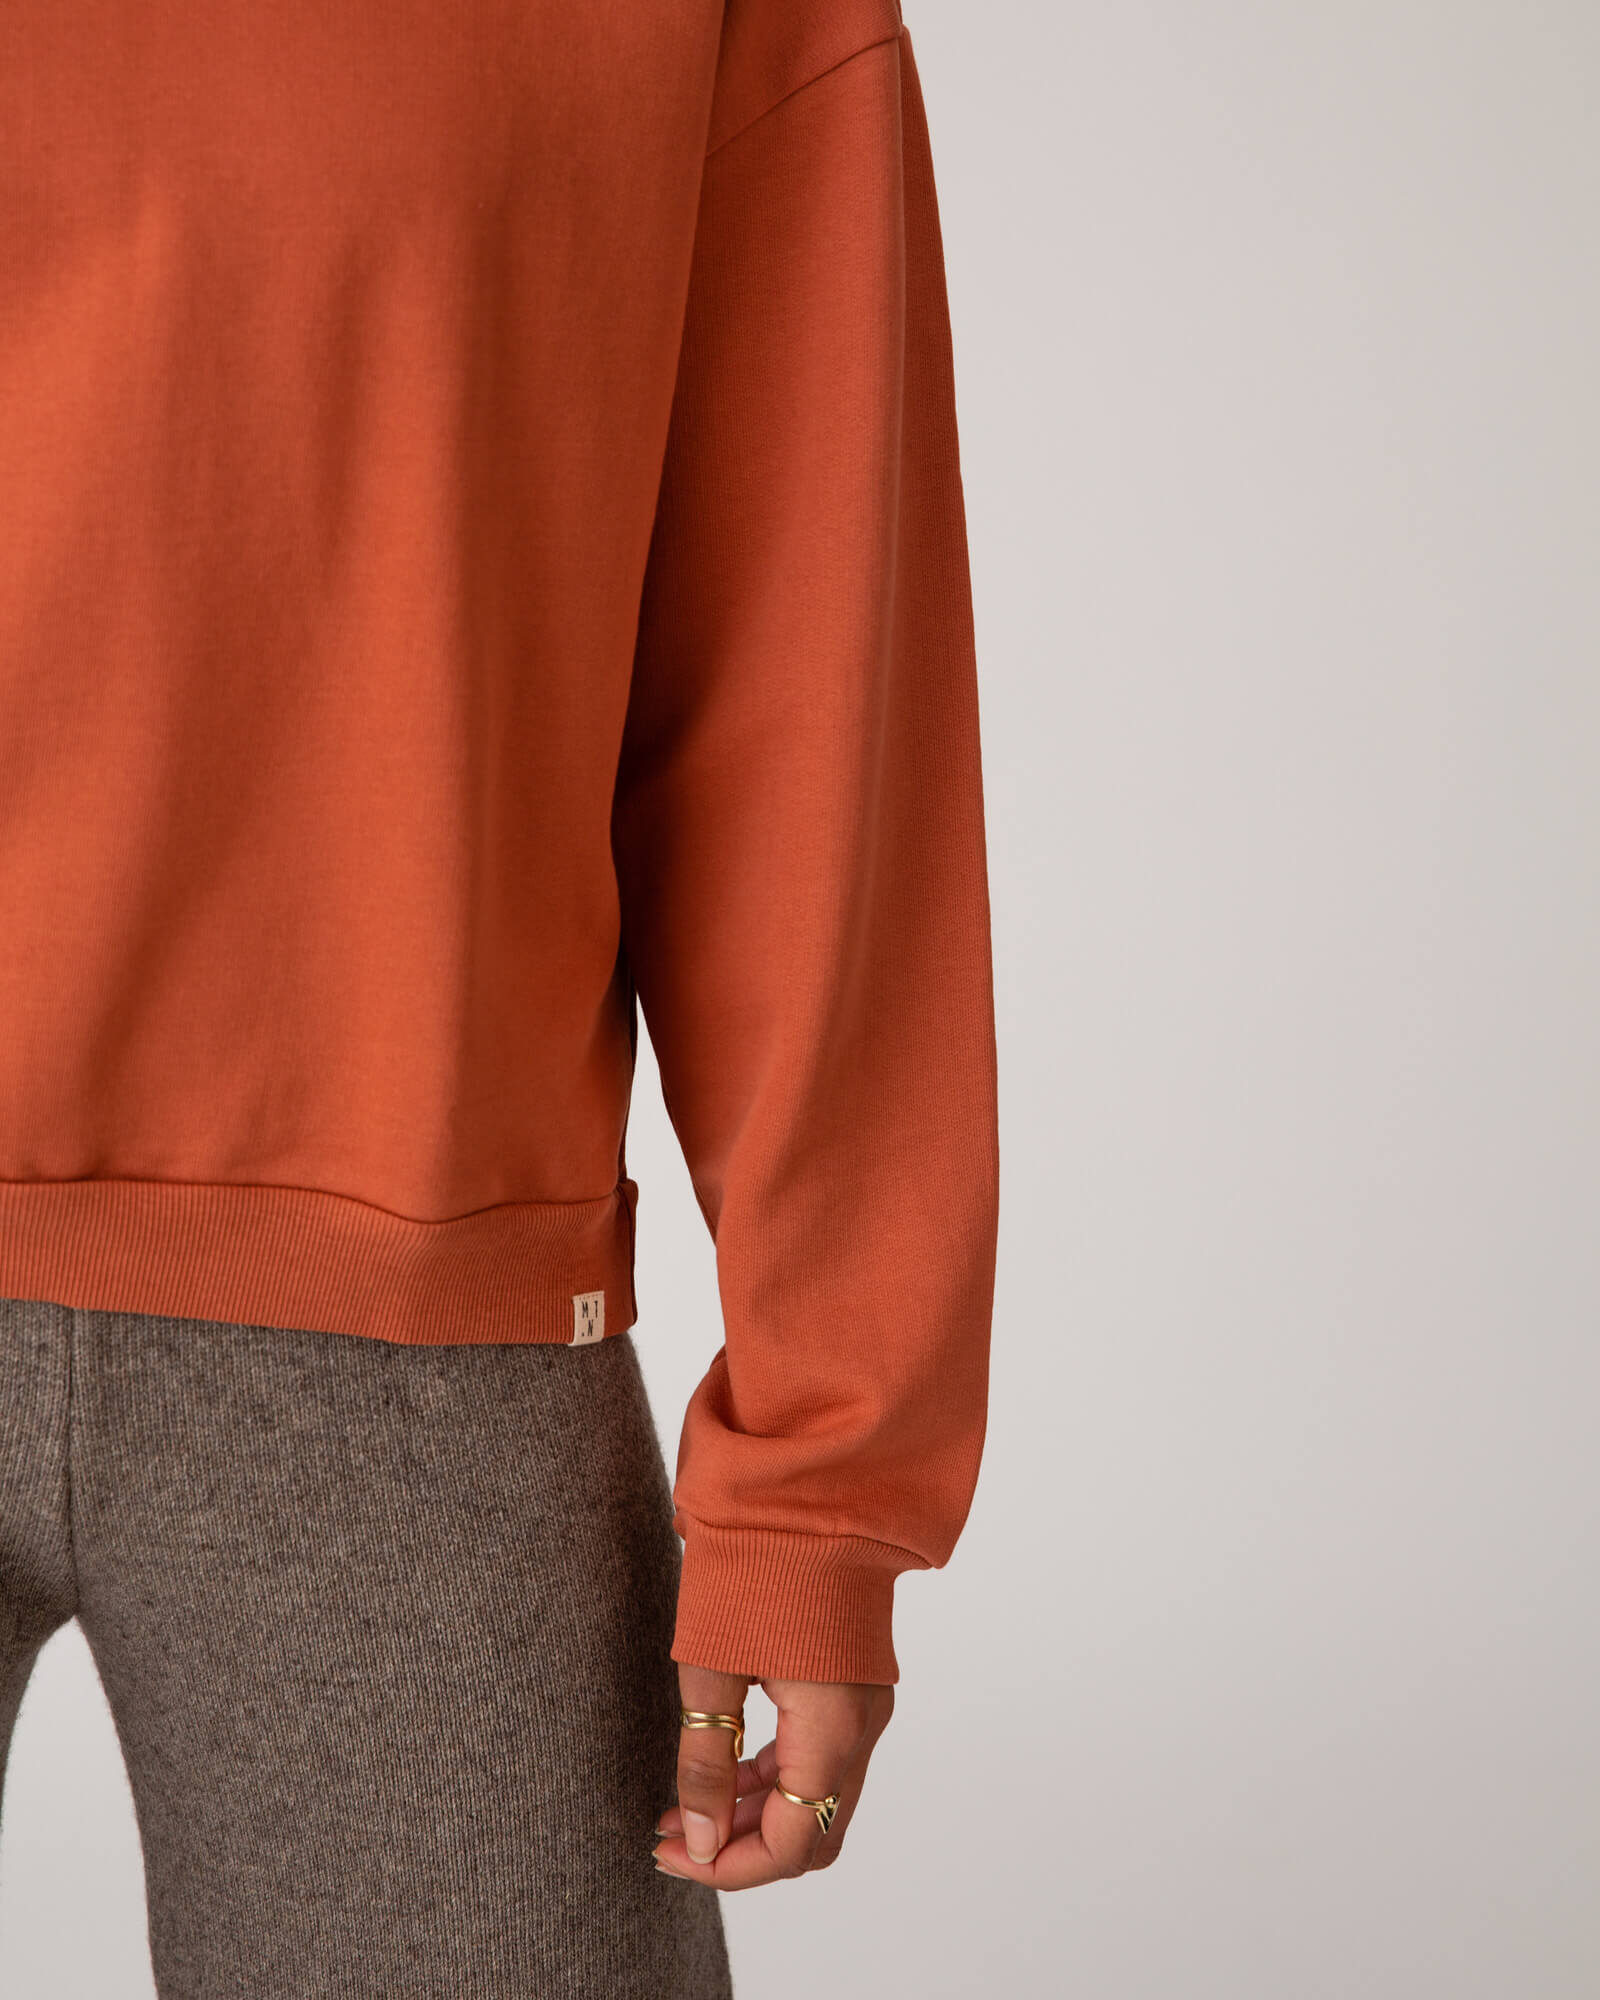 Orange long-sleeved cider sweatshirt made of organic cotton from Matona